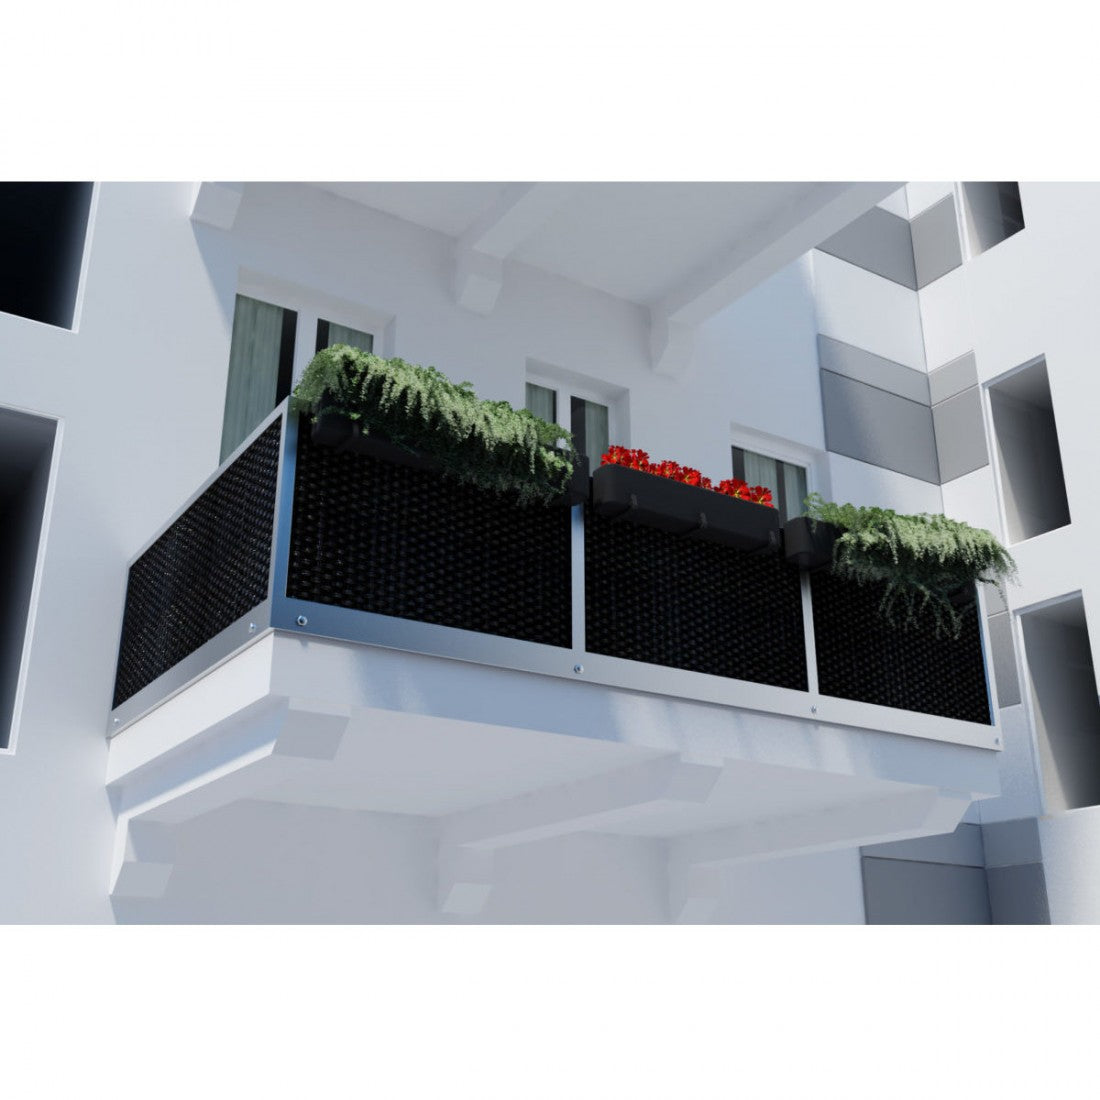 Black Rattan Balcony Privacy Screening 1m x 1m